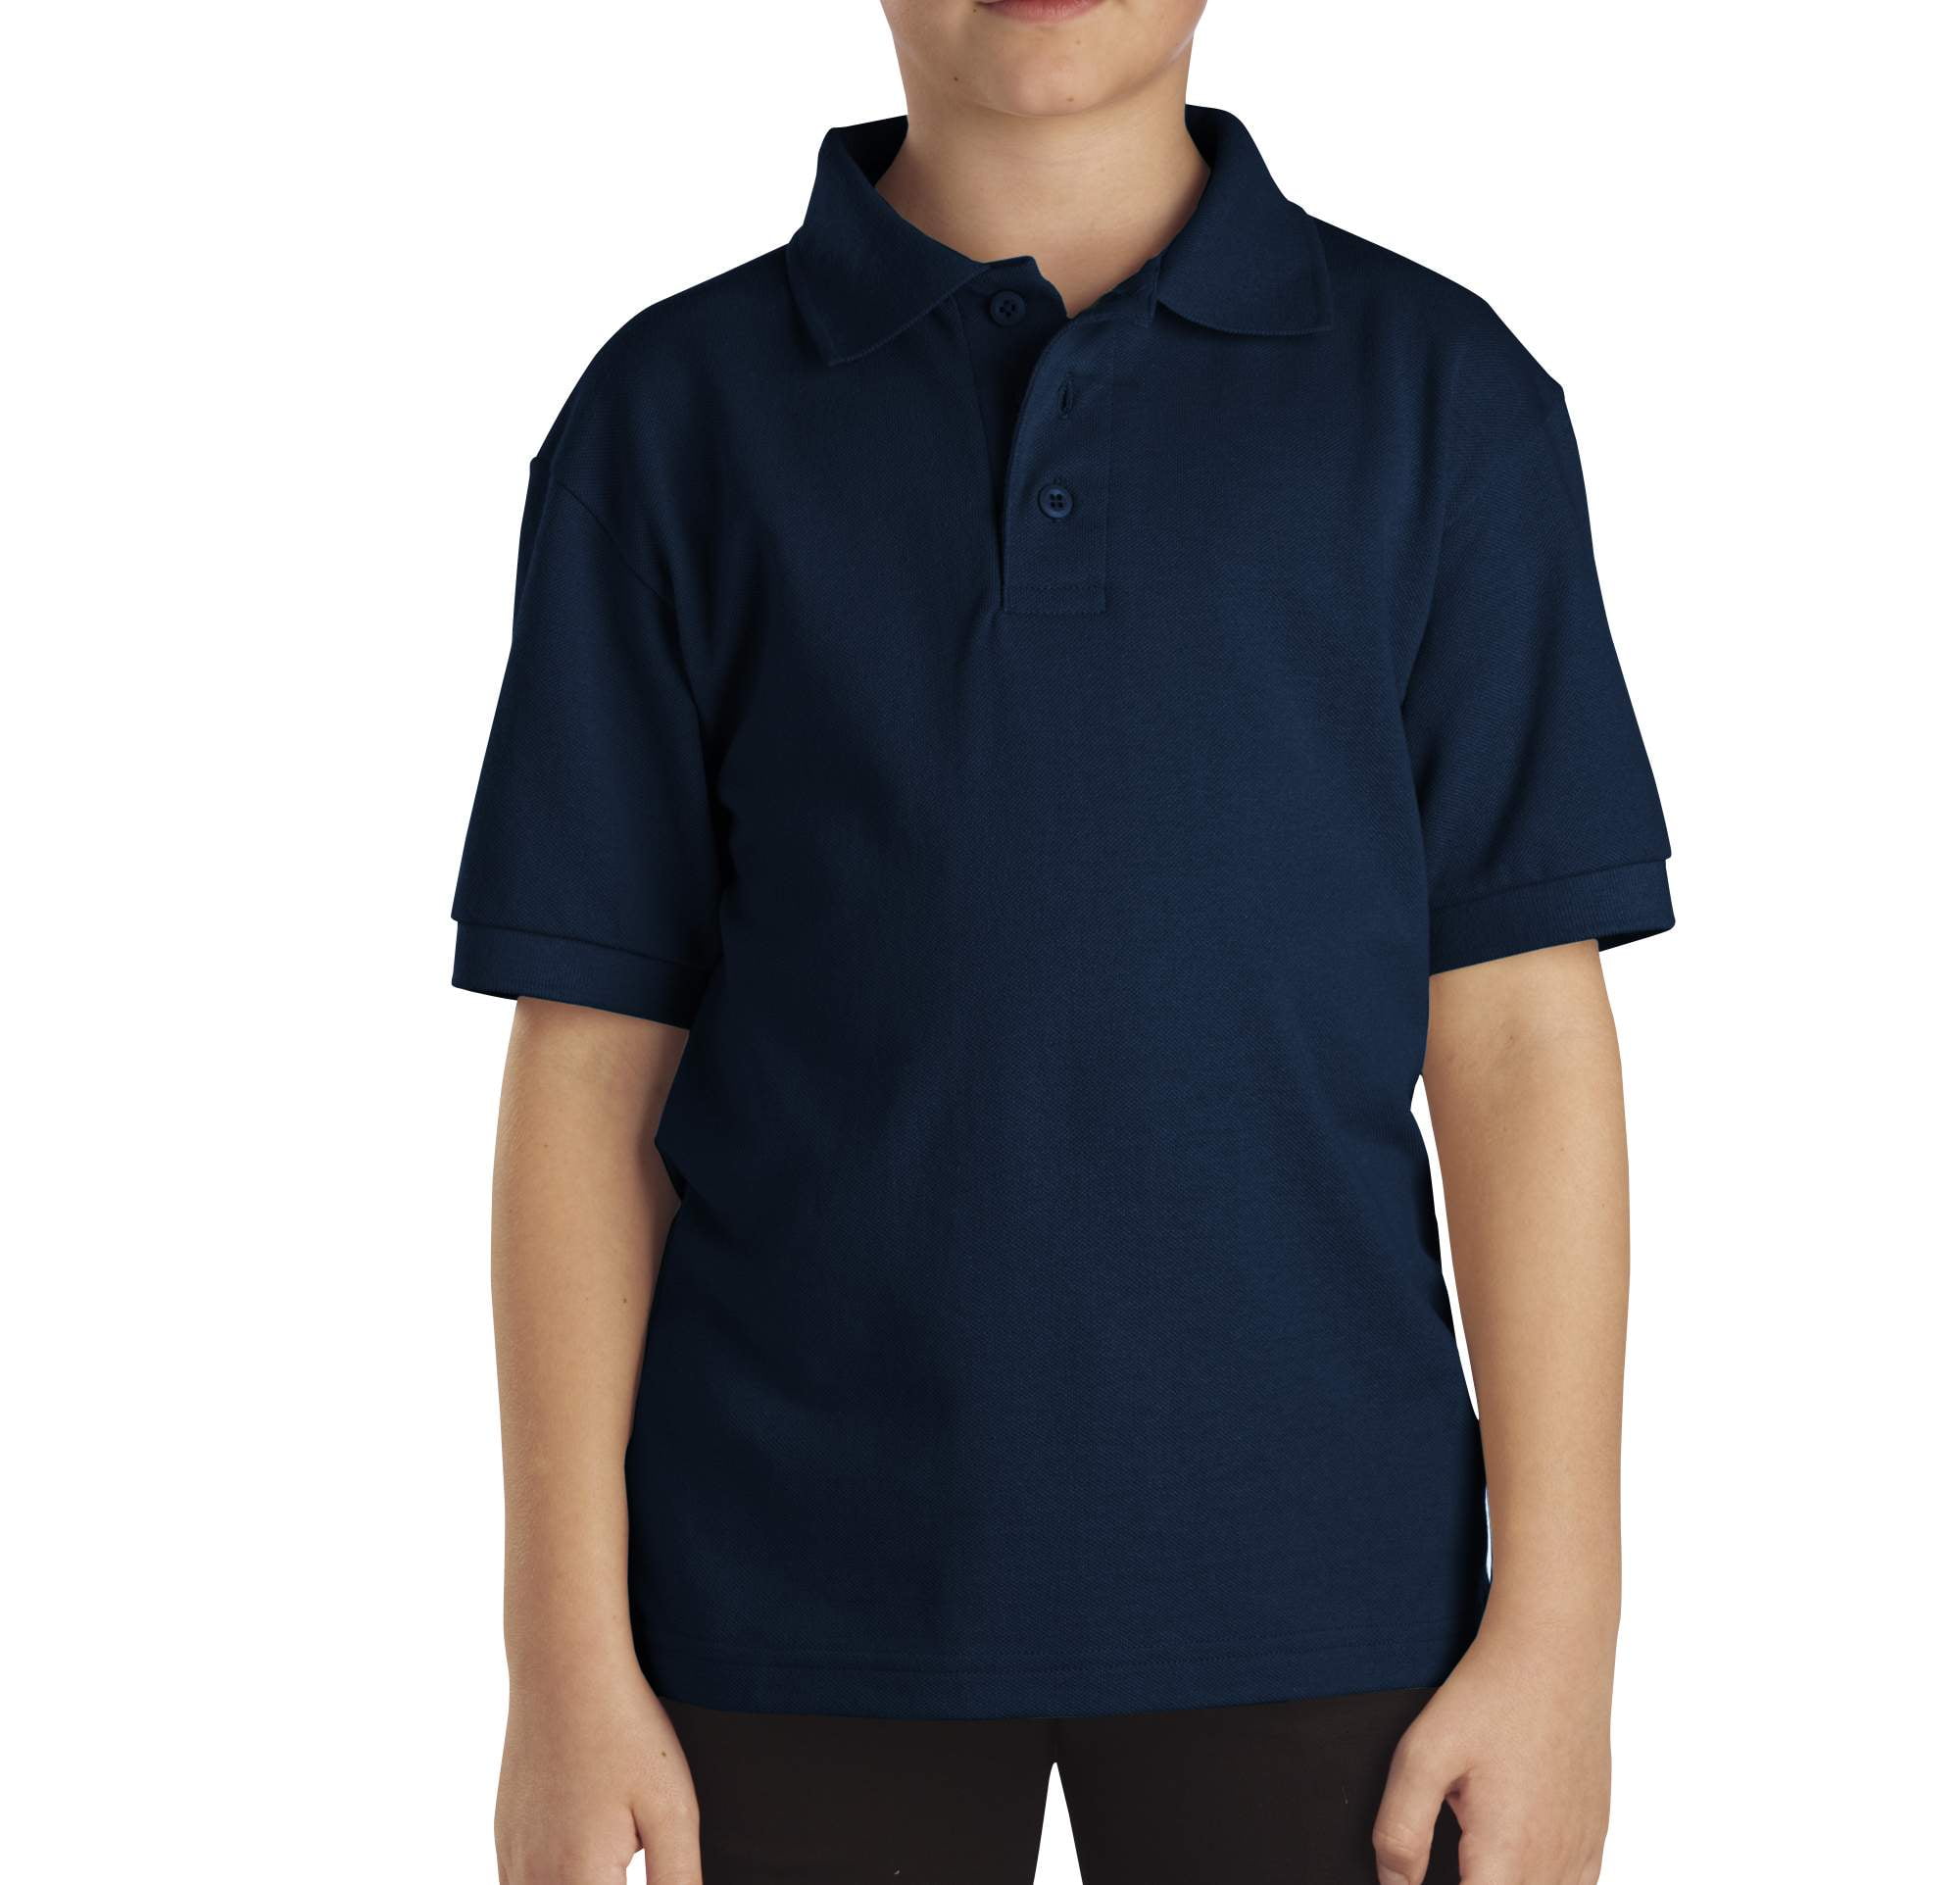 Boys polo. Поло Dickies. Navy short Sleeve Polo Shirt Kids. Формы рукава для поло. Dickies для детей.